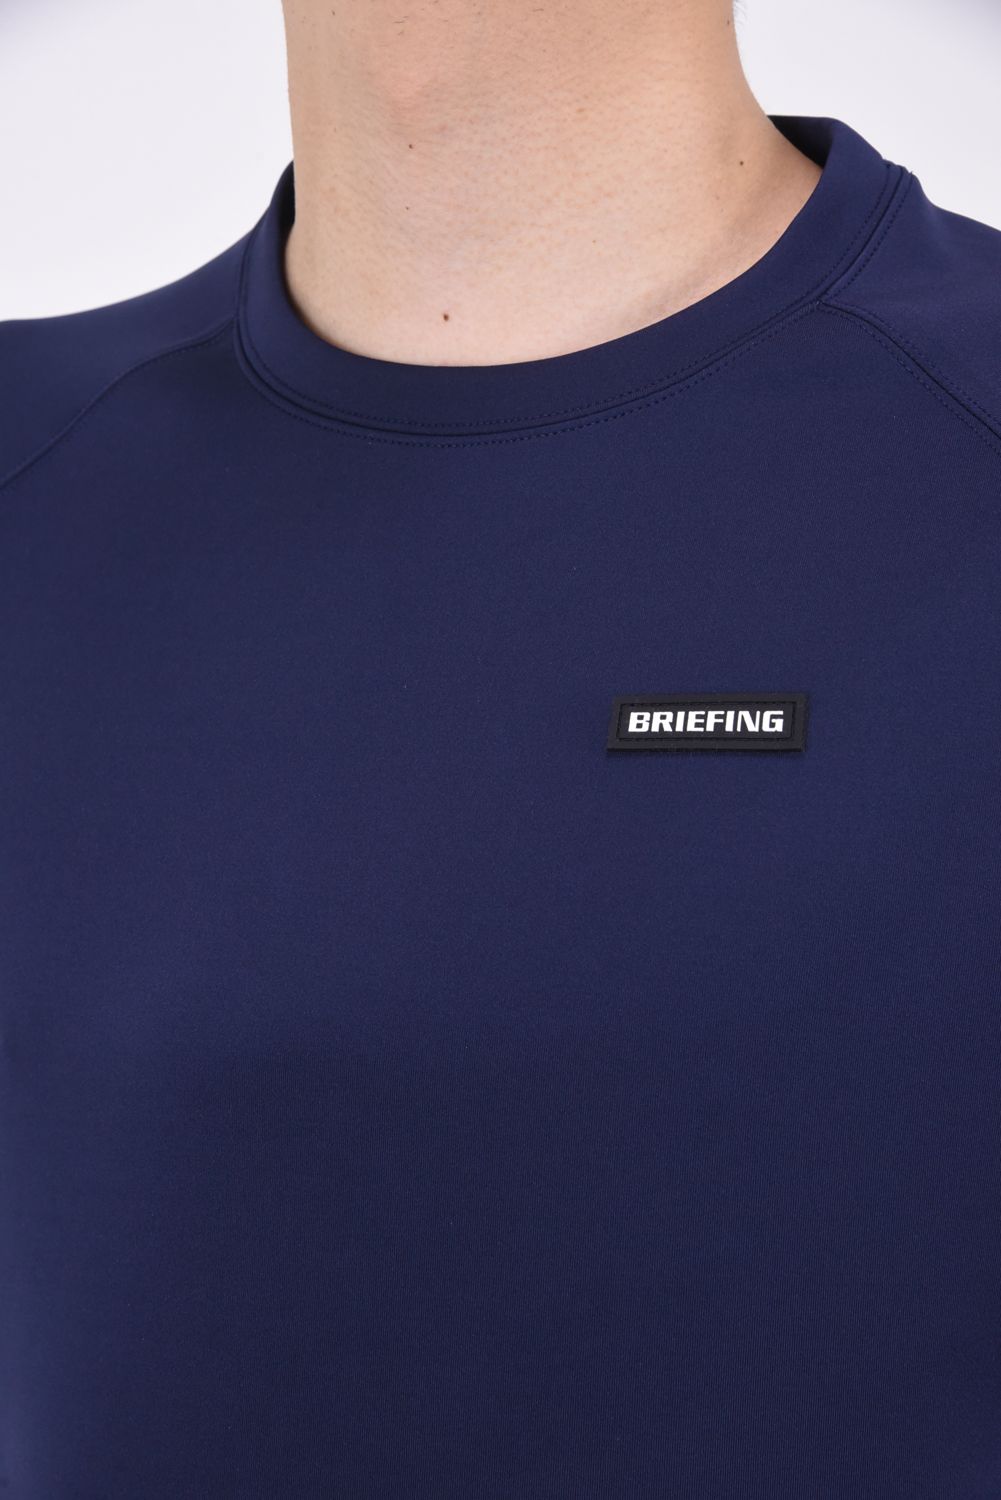 BRIEFING - MENS SIDE LOGO LINE CREW NECK / ロゴ サイドライン 